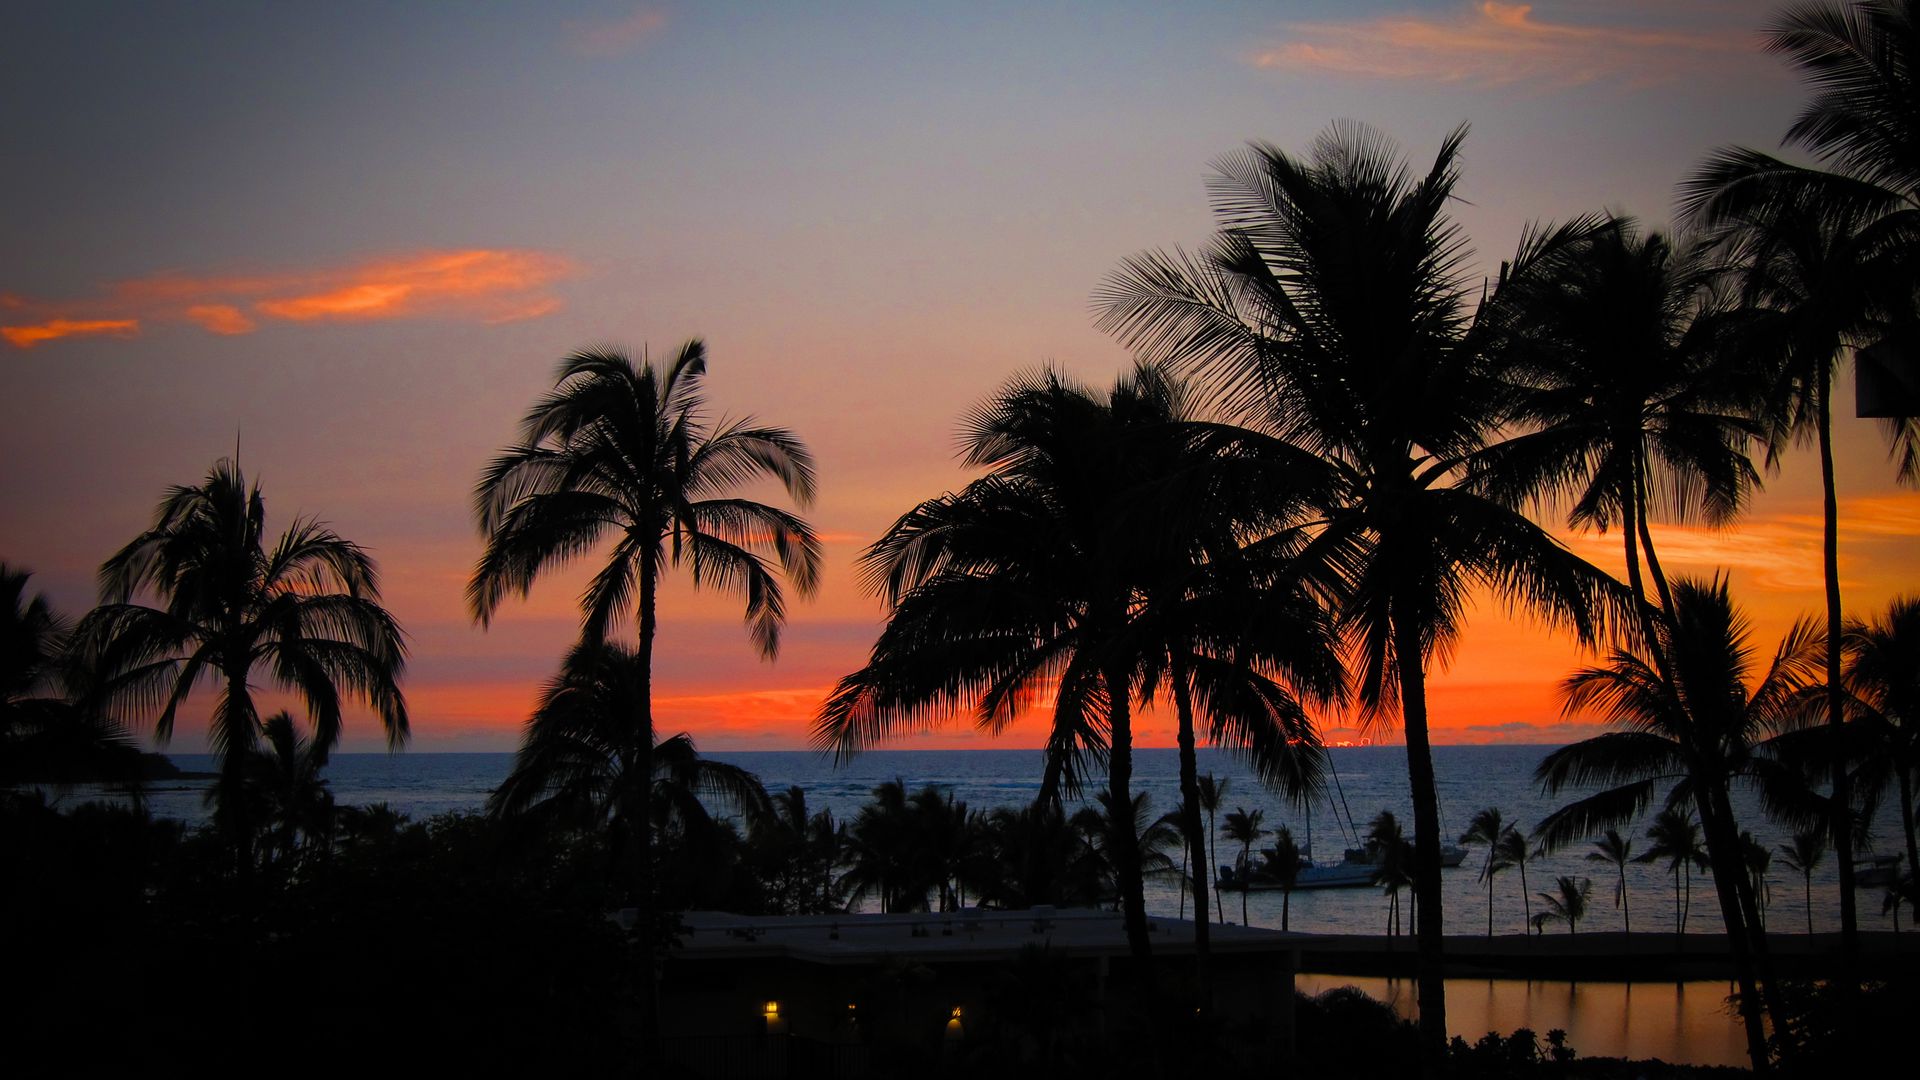 7 Palm Trees & Man With Bike Horiz Format TK 202b Telefonkarte Hawaiian Sunset 